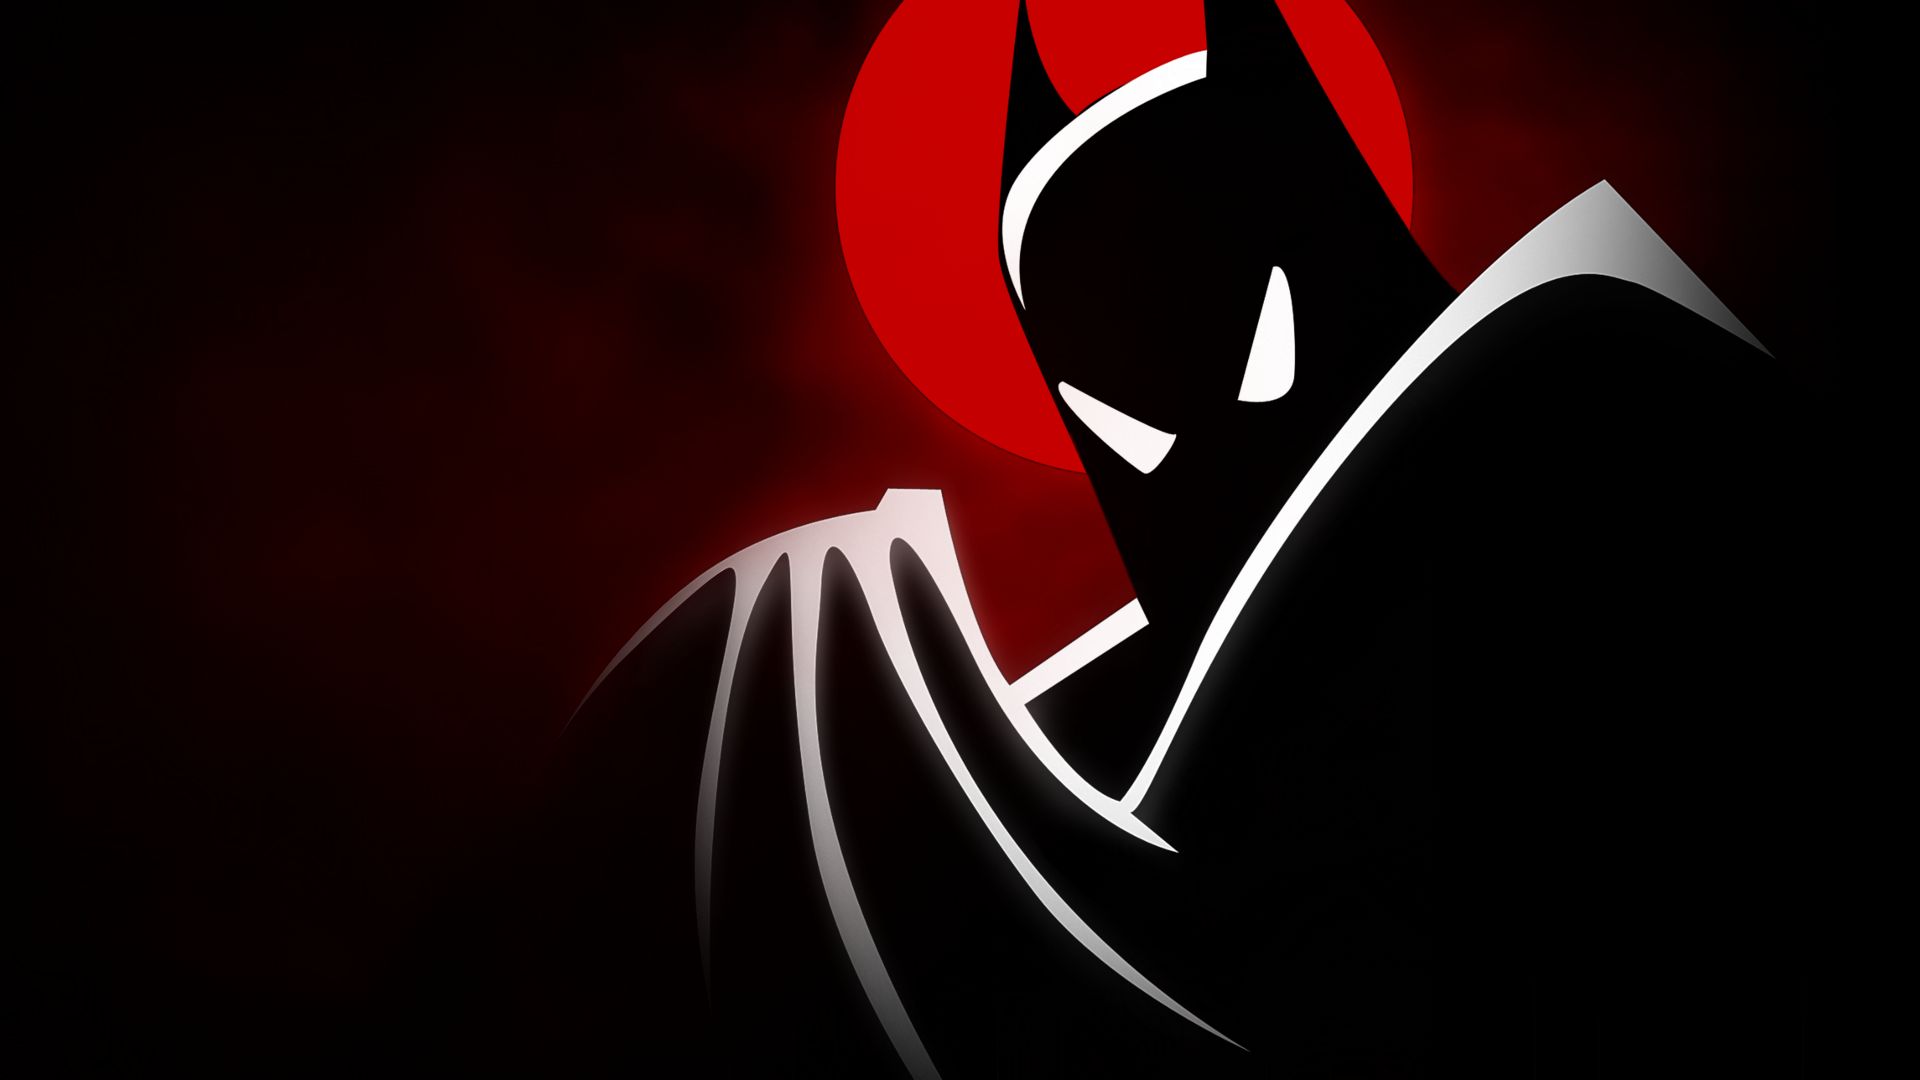 batman animated wallpaper